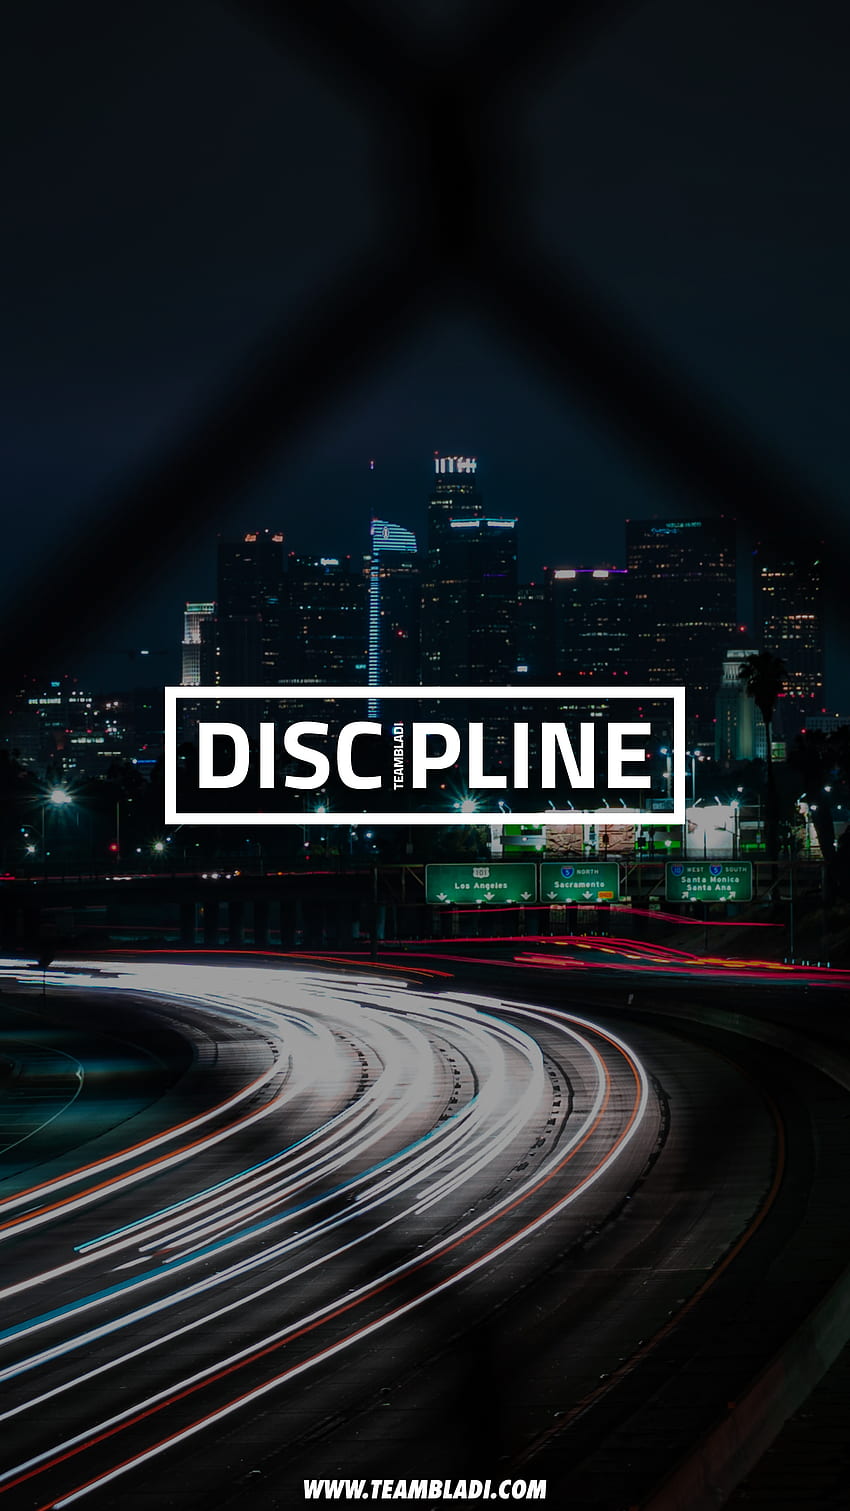 Discipline quote mobile wallpaper  Discipline quotes Motivational quotes  wallpaper Motivational wallpaper